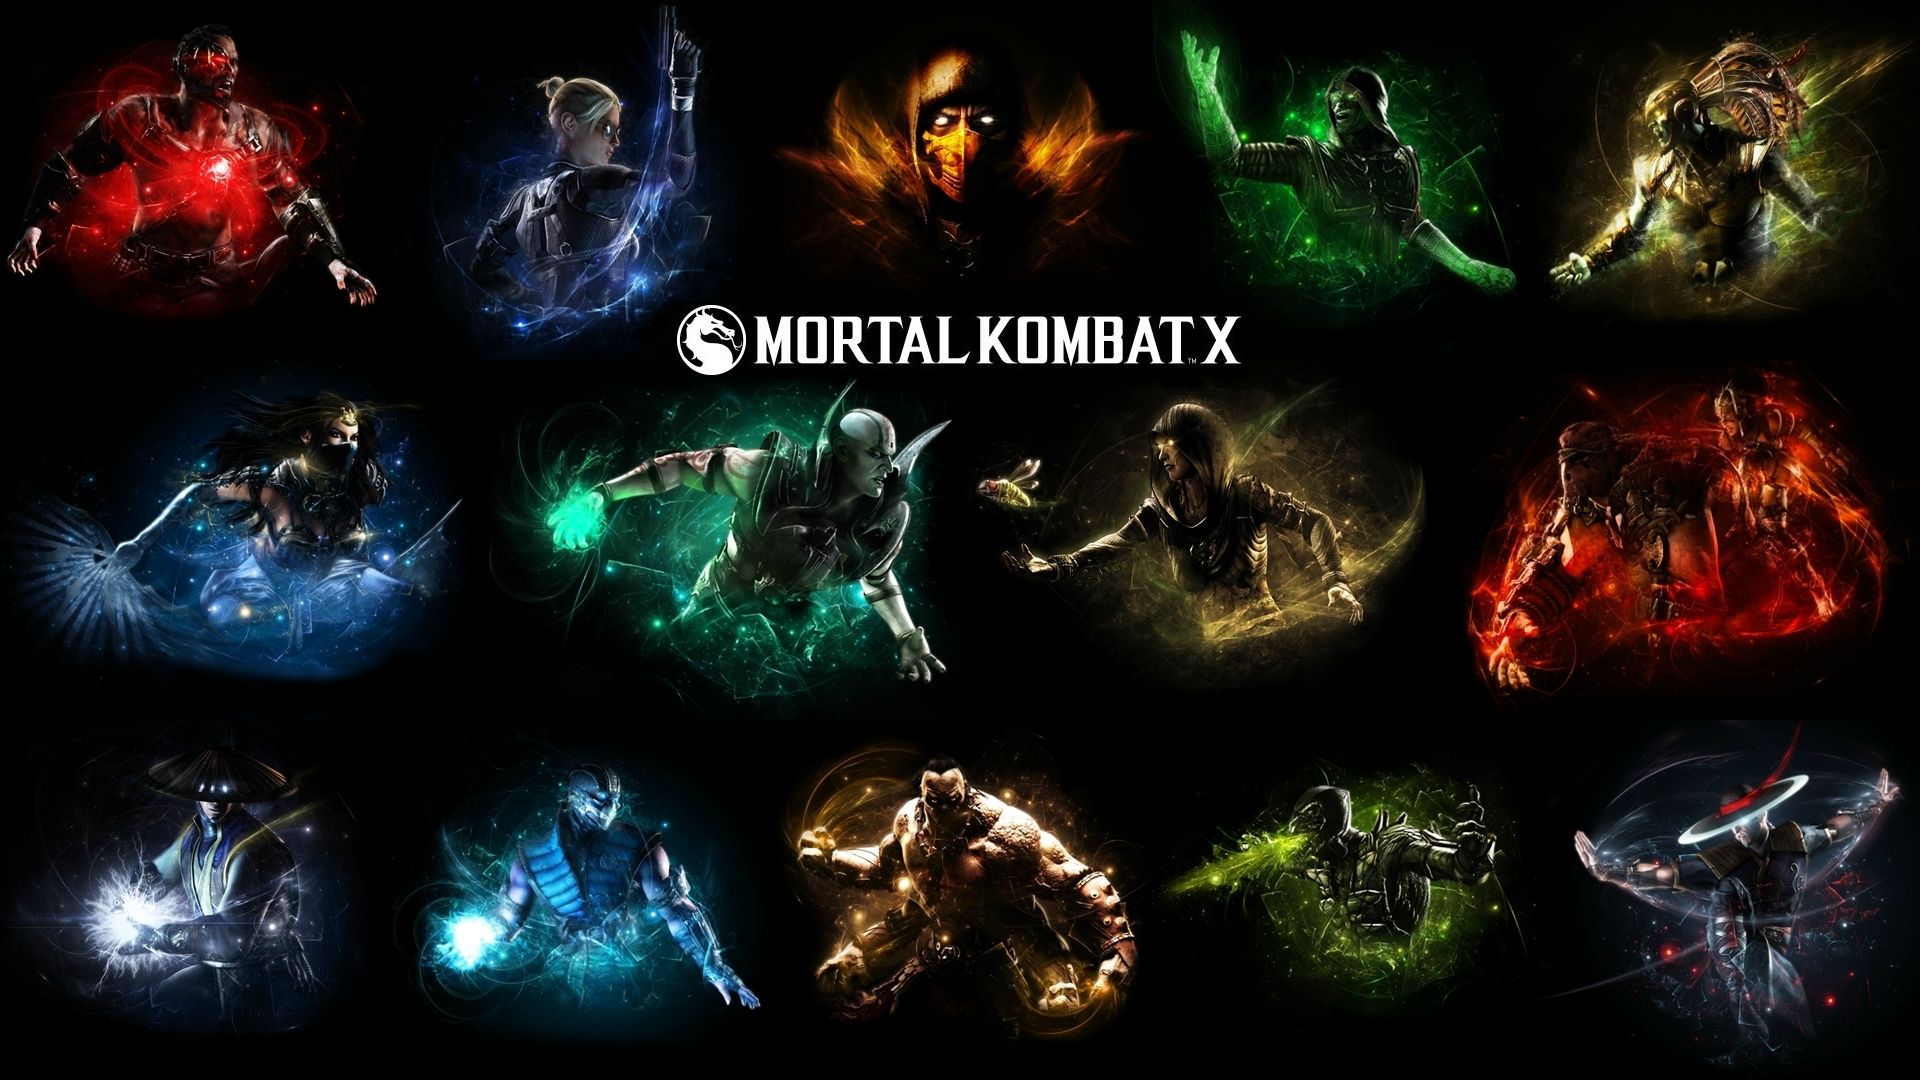 Gorgeous Mortal Kombat X Wallpaper Full HD Pictures